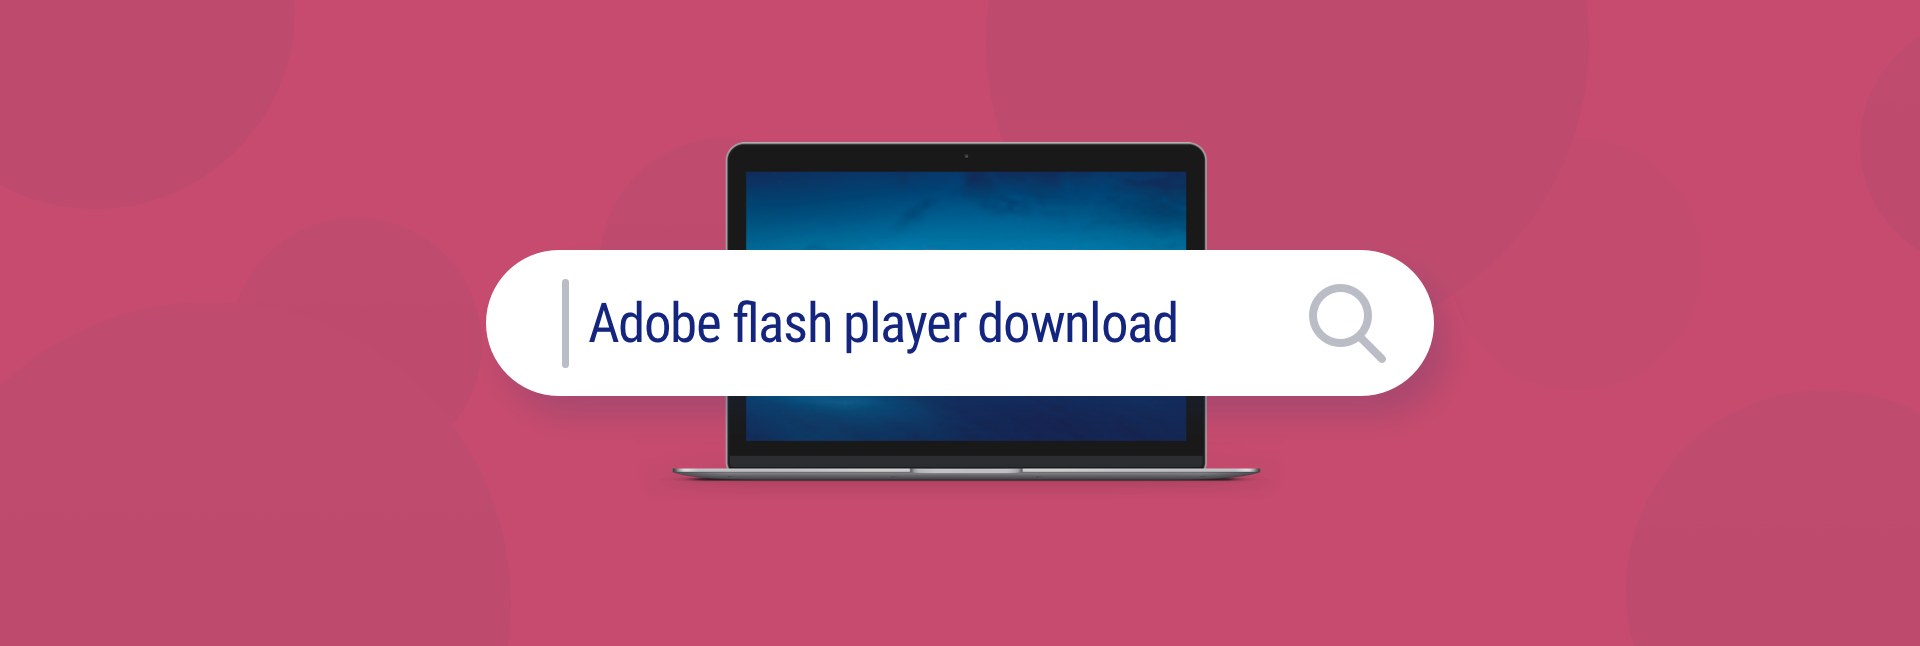 adboe flash player for mac